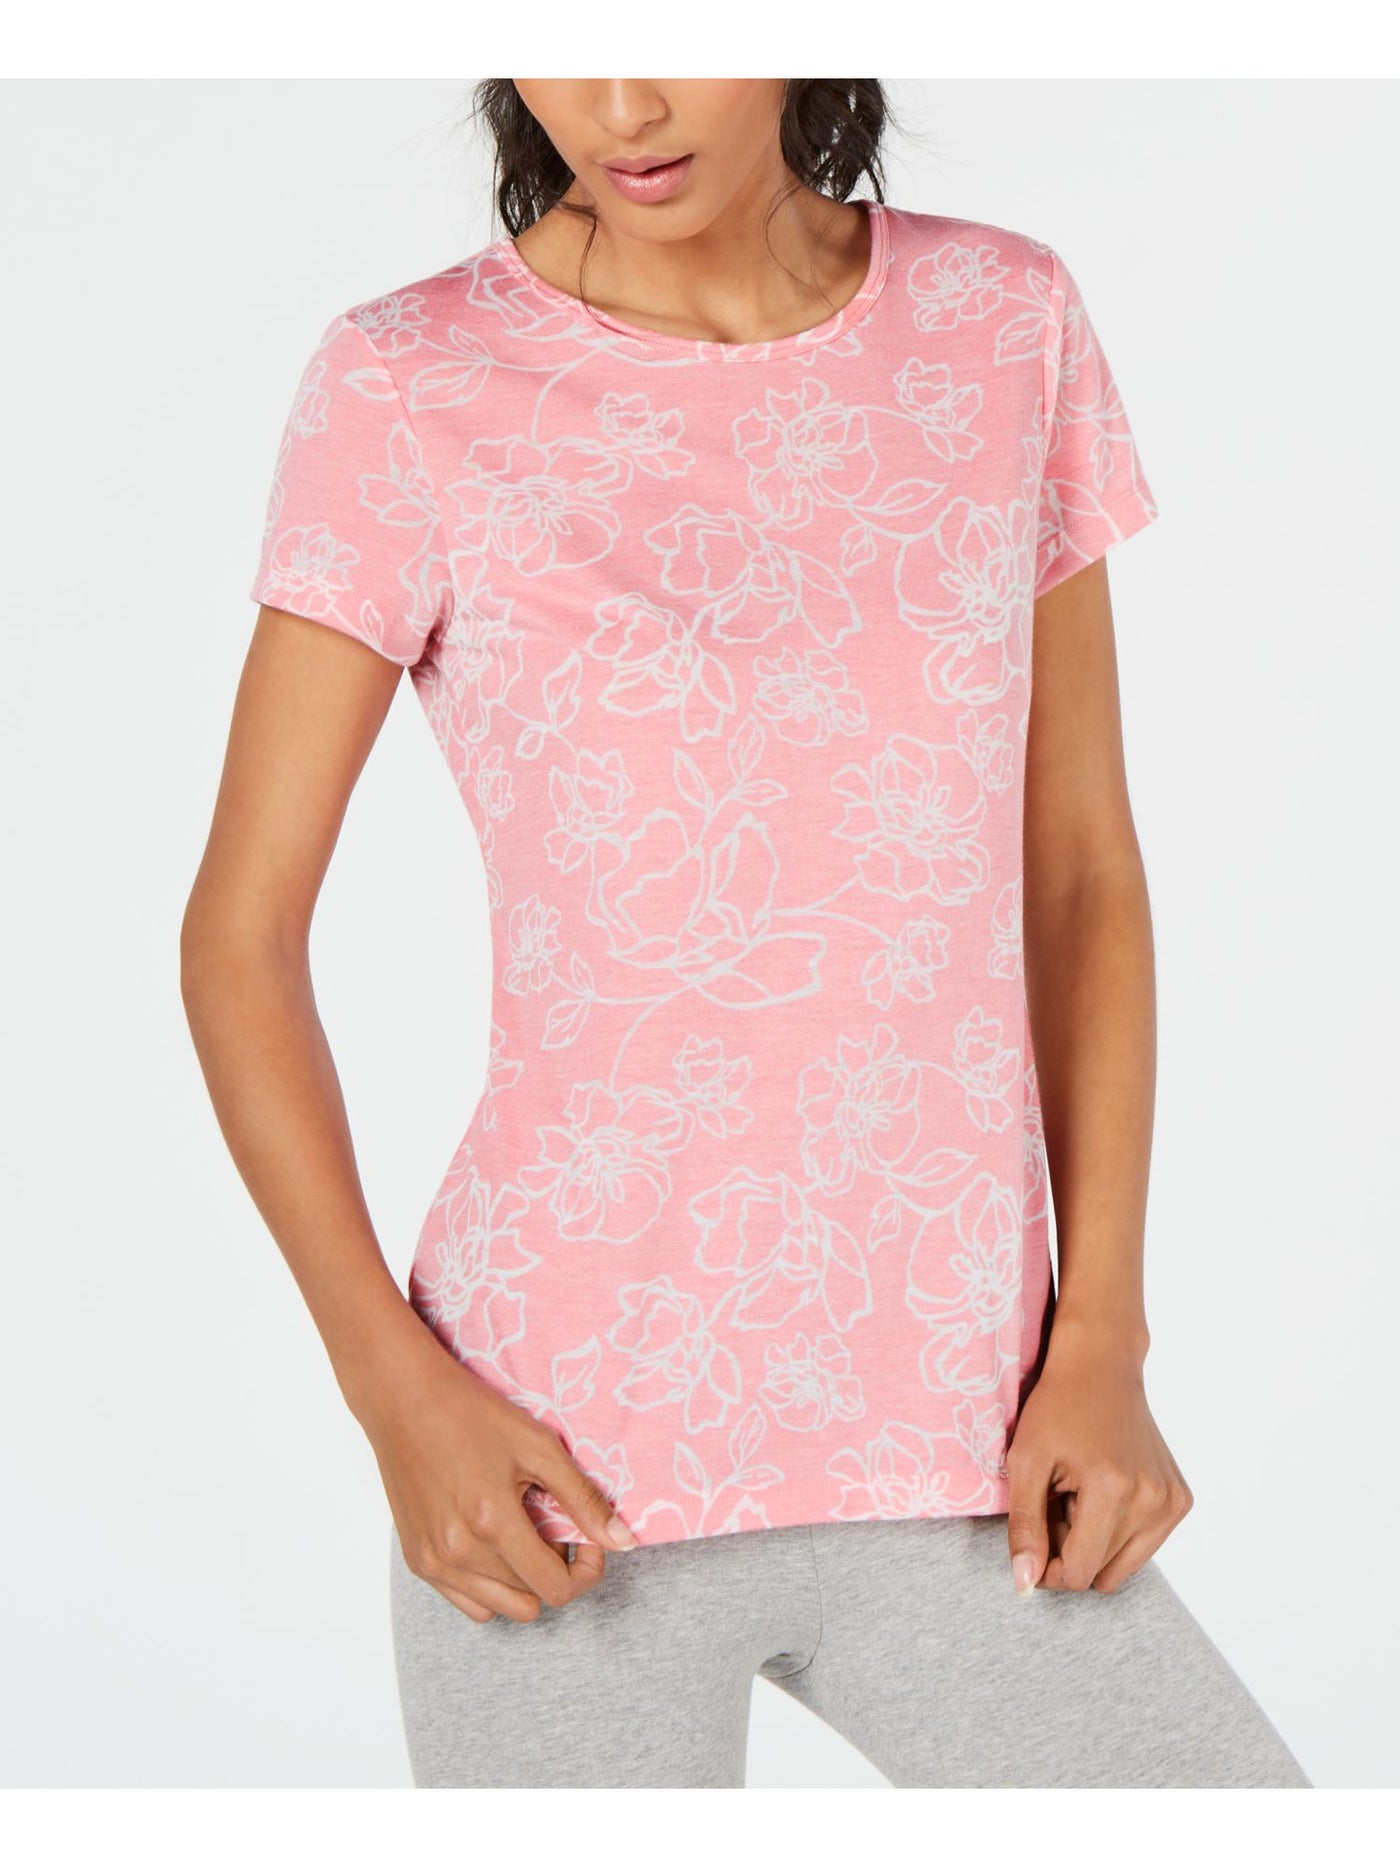 IDEOLOGY Womens Pink Floral Short Sleeve Jewel Neck T-Shirt S